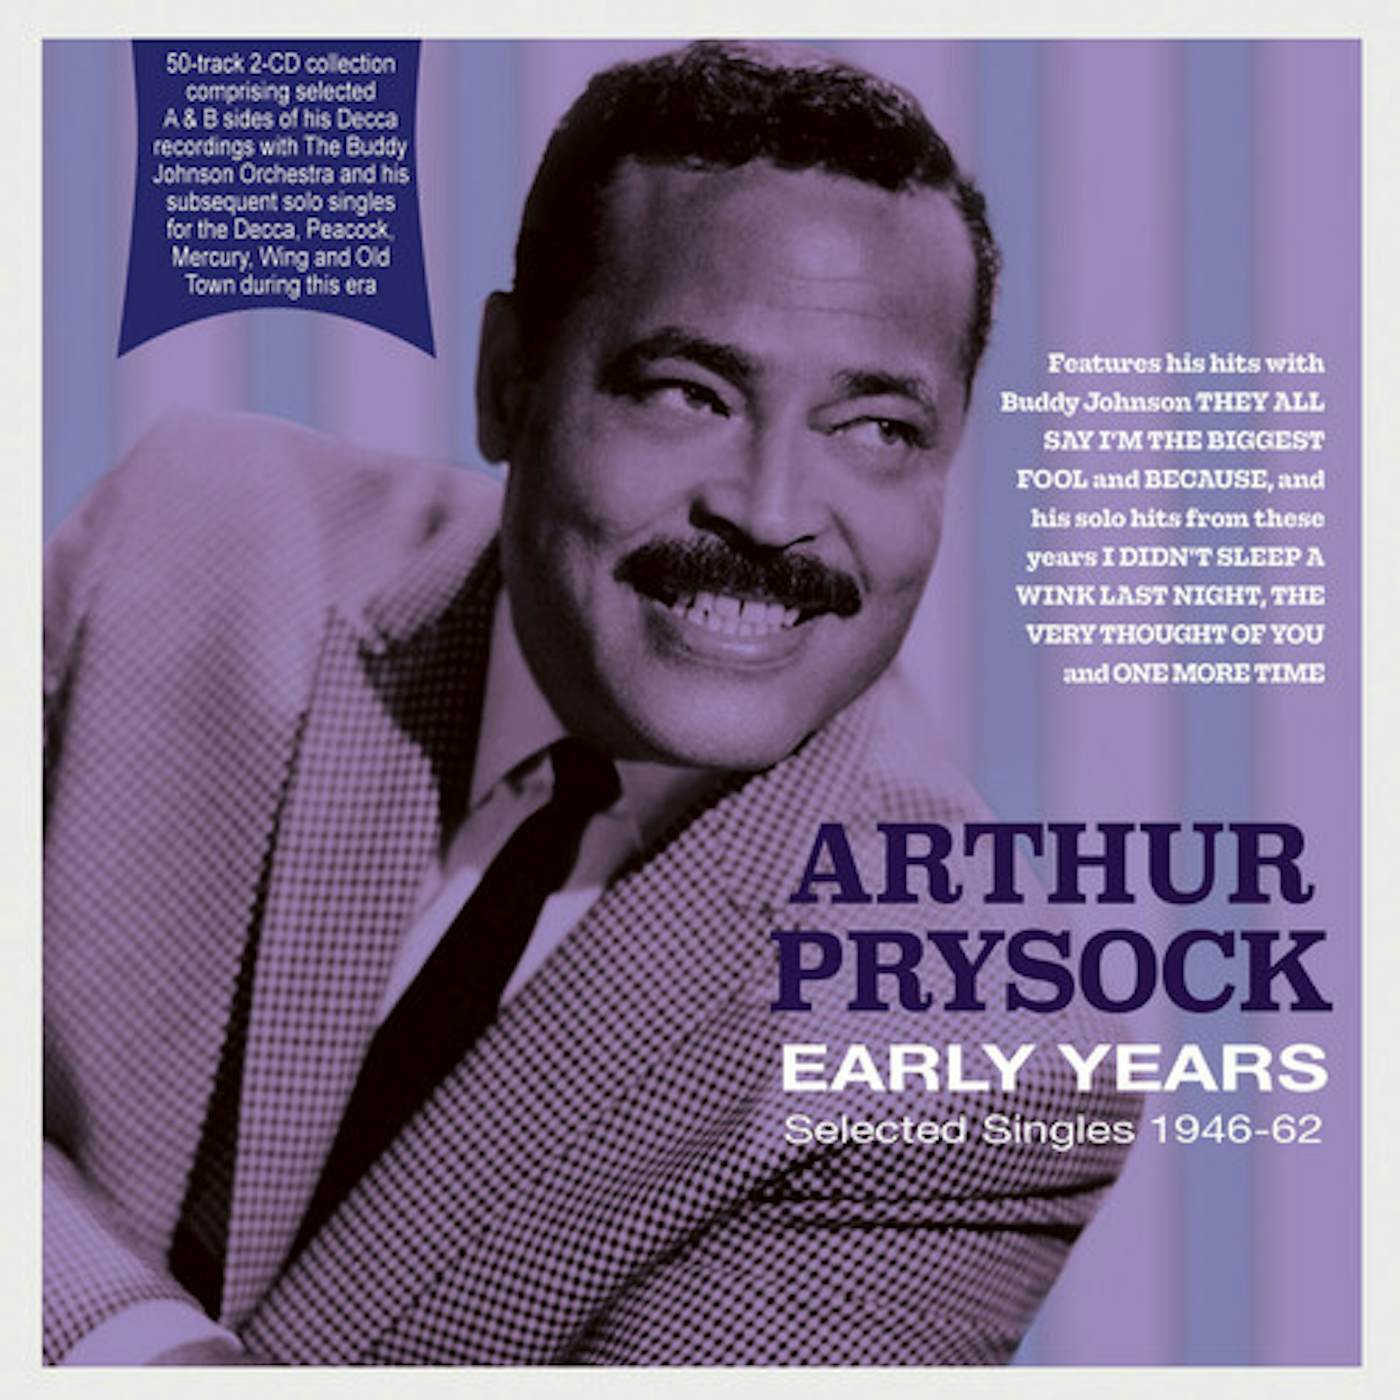 Arthur Prysock EARLY YEARS: SELECTED SINGLES 1946-62 CD